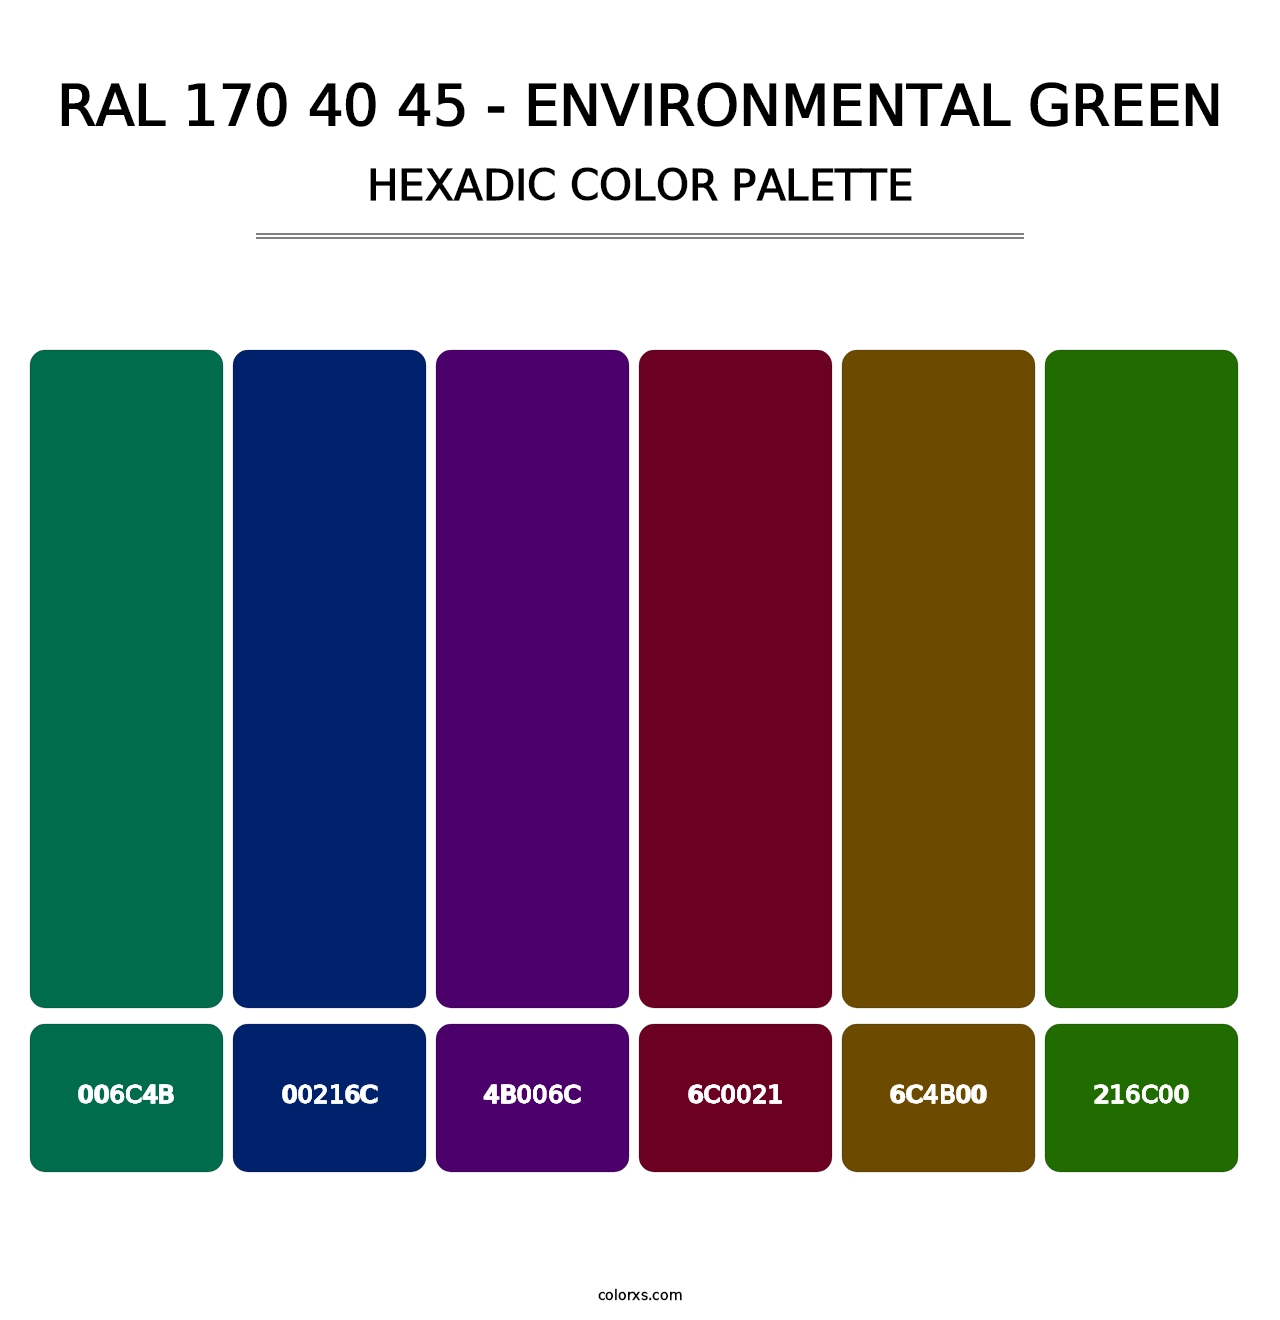 RAL 170 40 45 - Environmental Green - Hexadic Color Palette